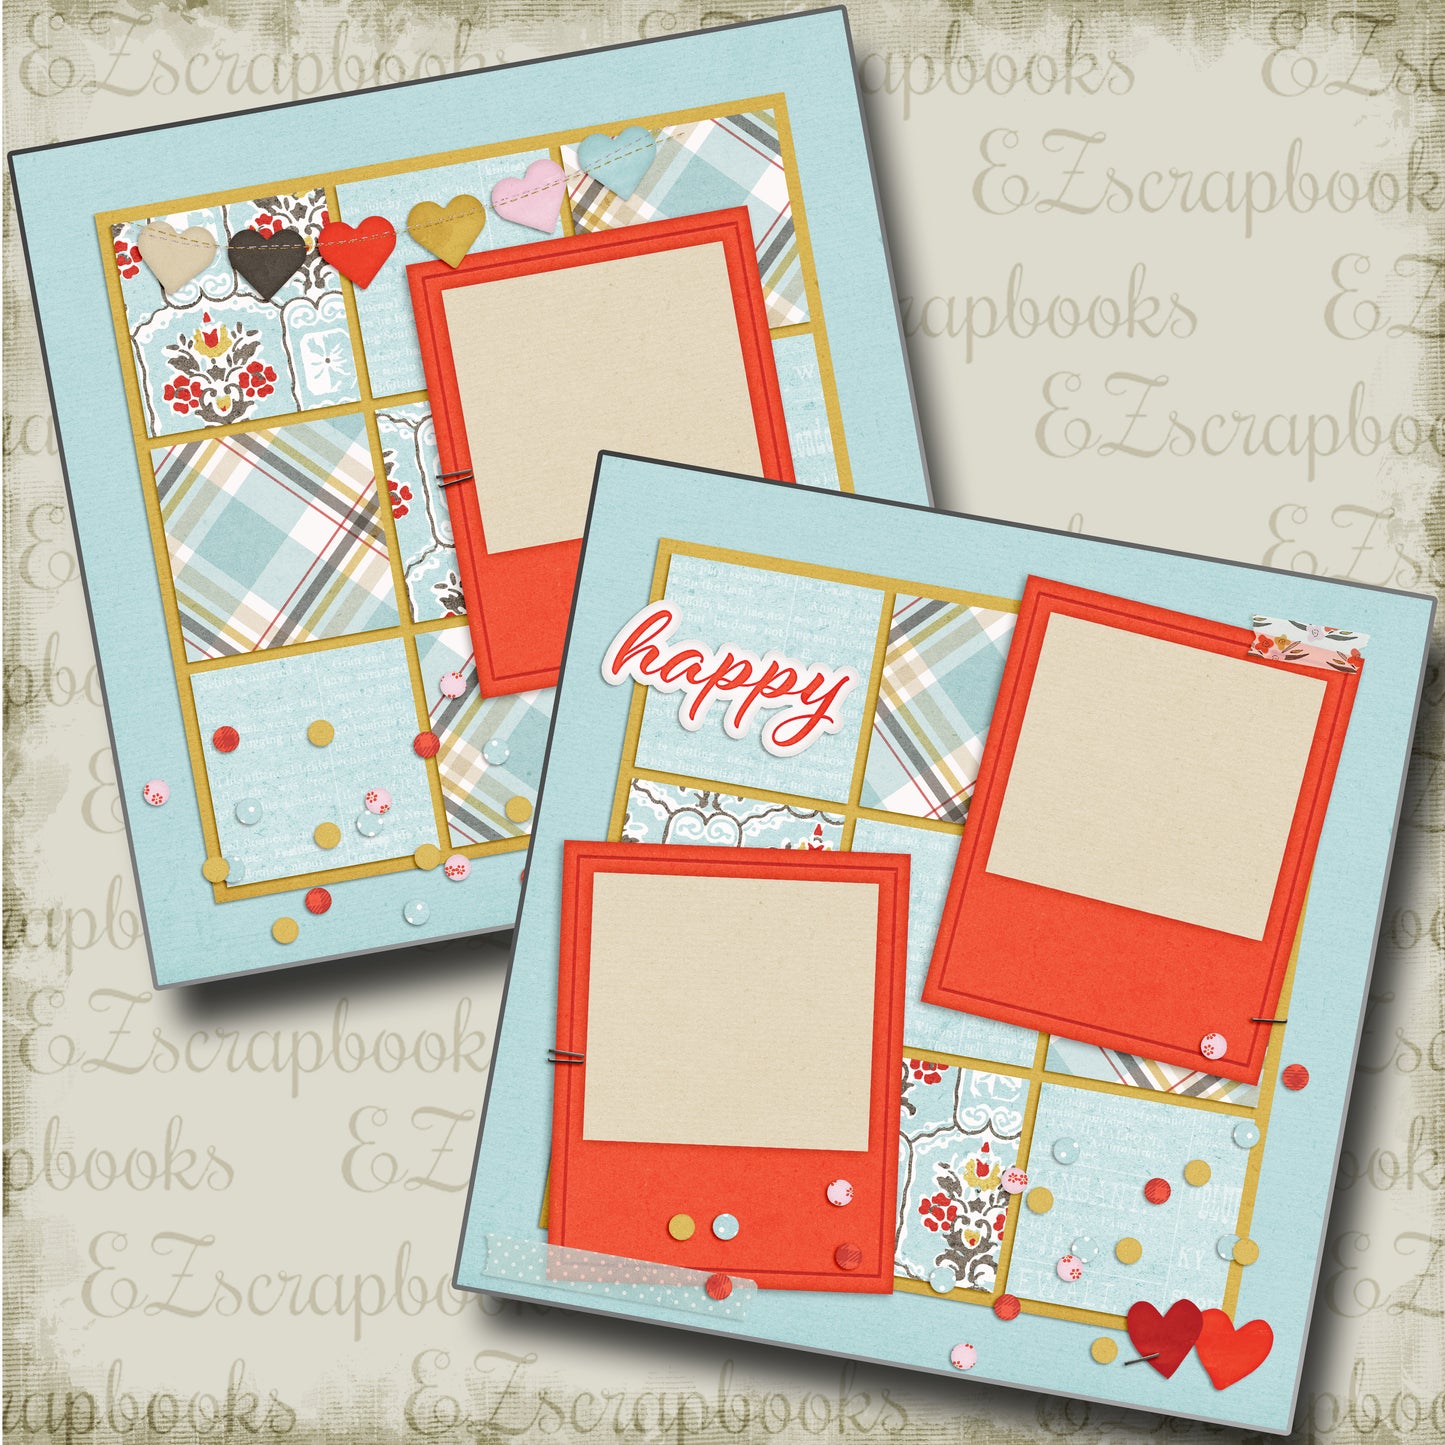 Happy - 4598 - EZscrapbooks Scrapbook Layouts Love - Valentine